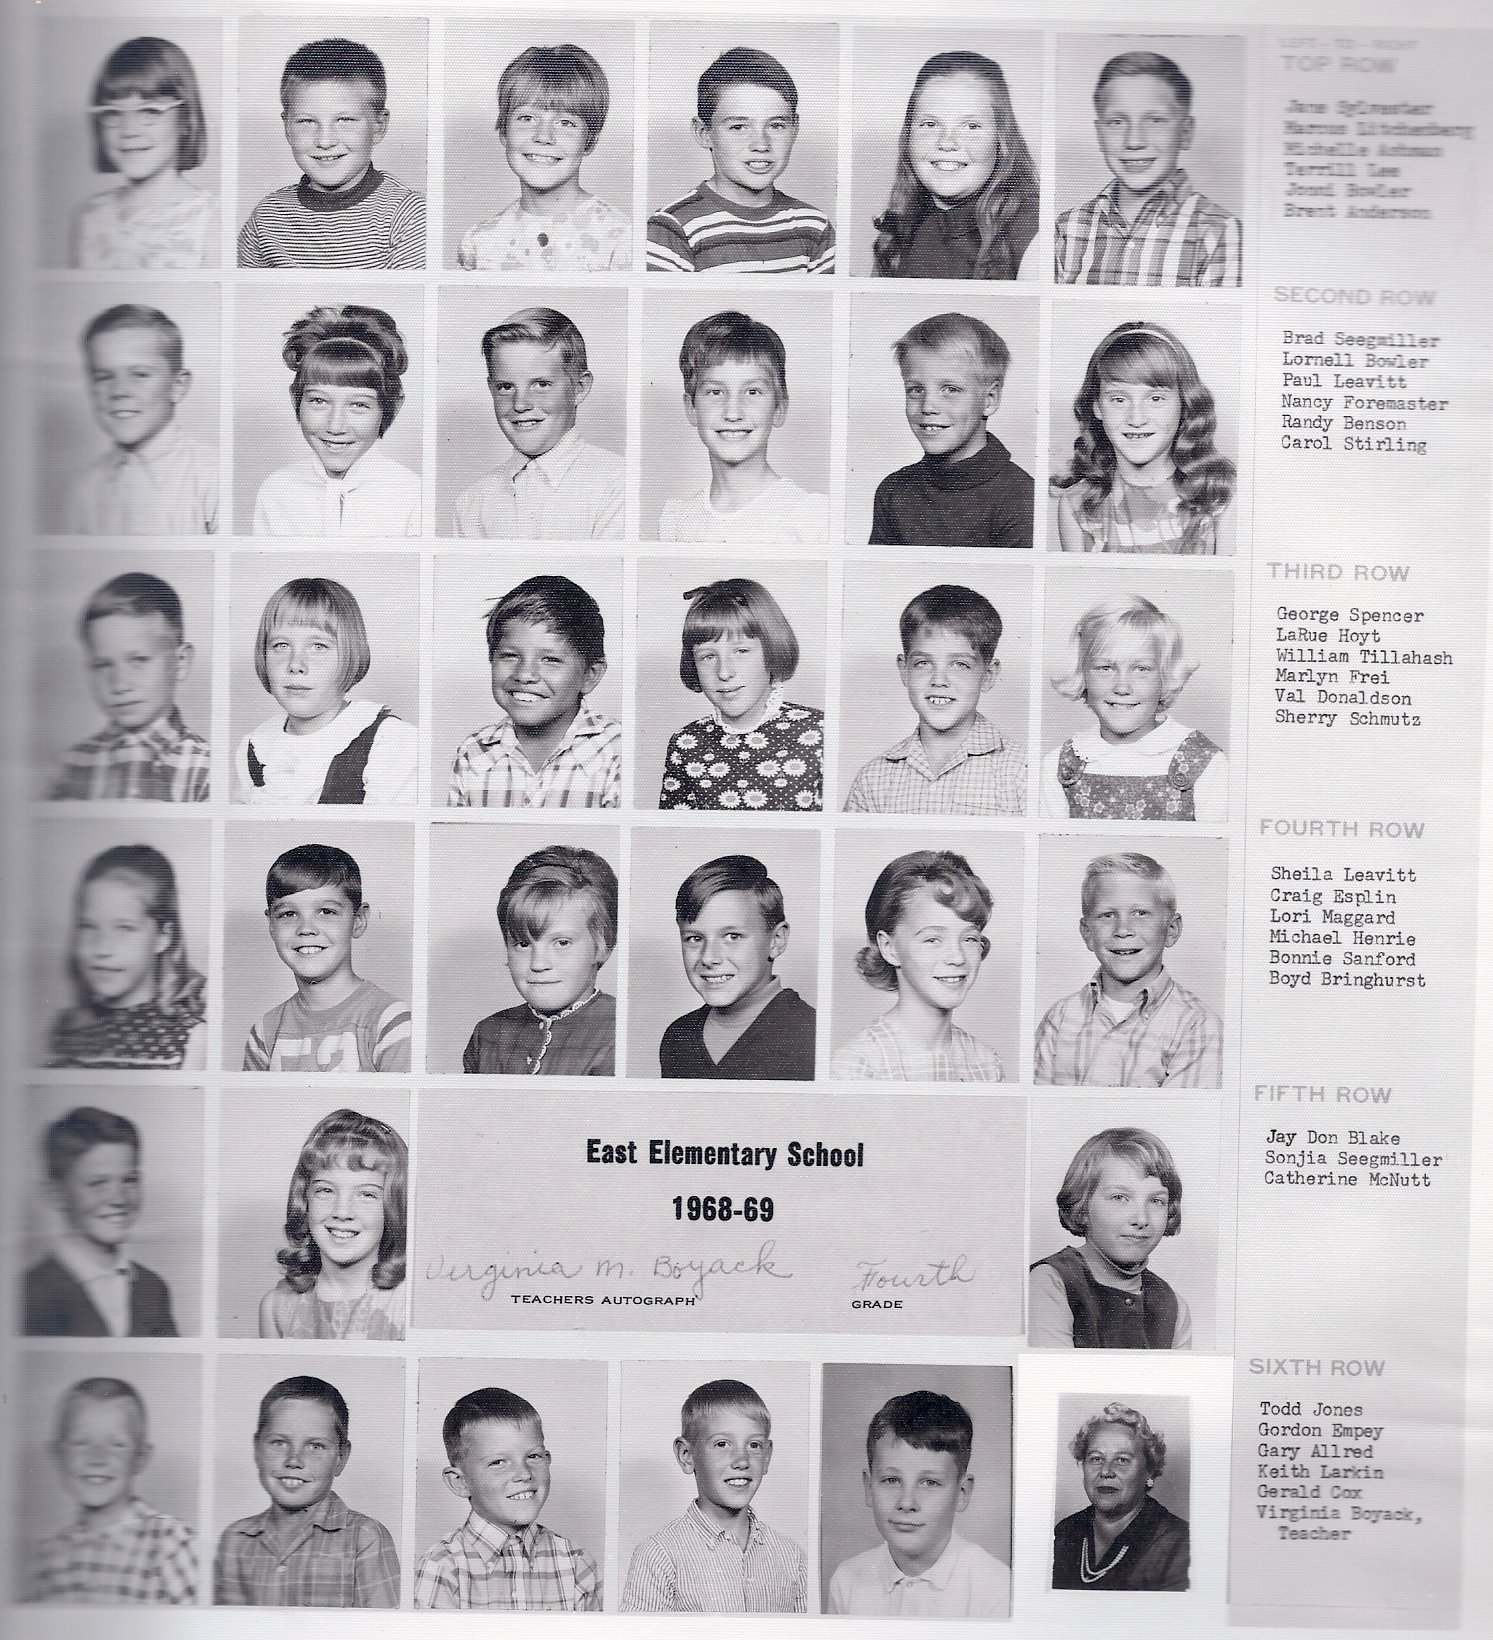 Mrs. Virginia Boyack's 1968-1969 fourth grade class at East Elementary School